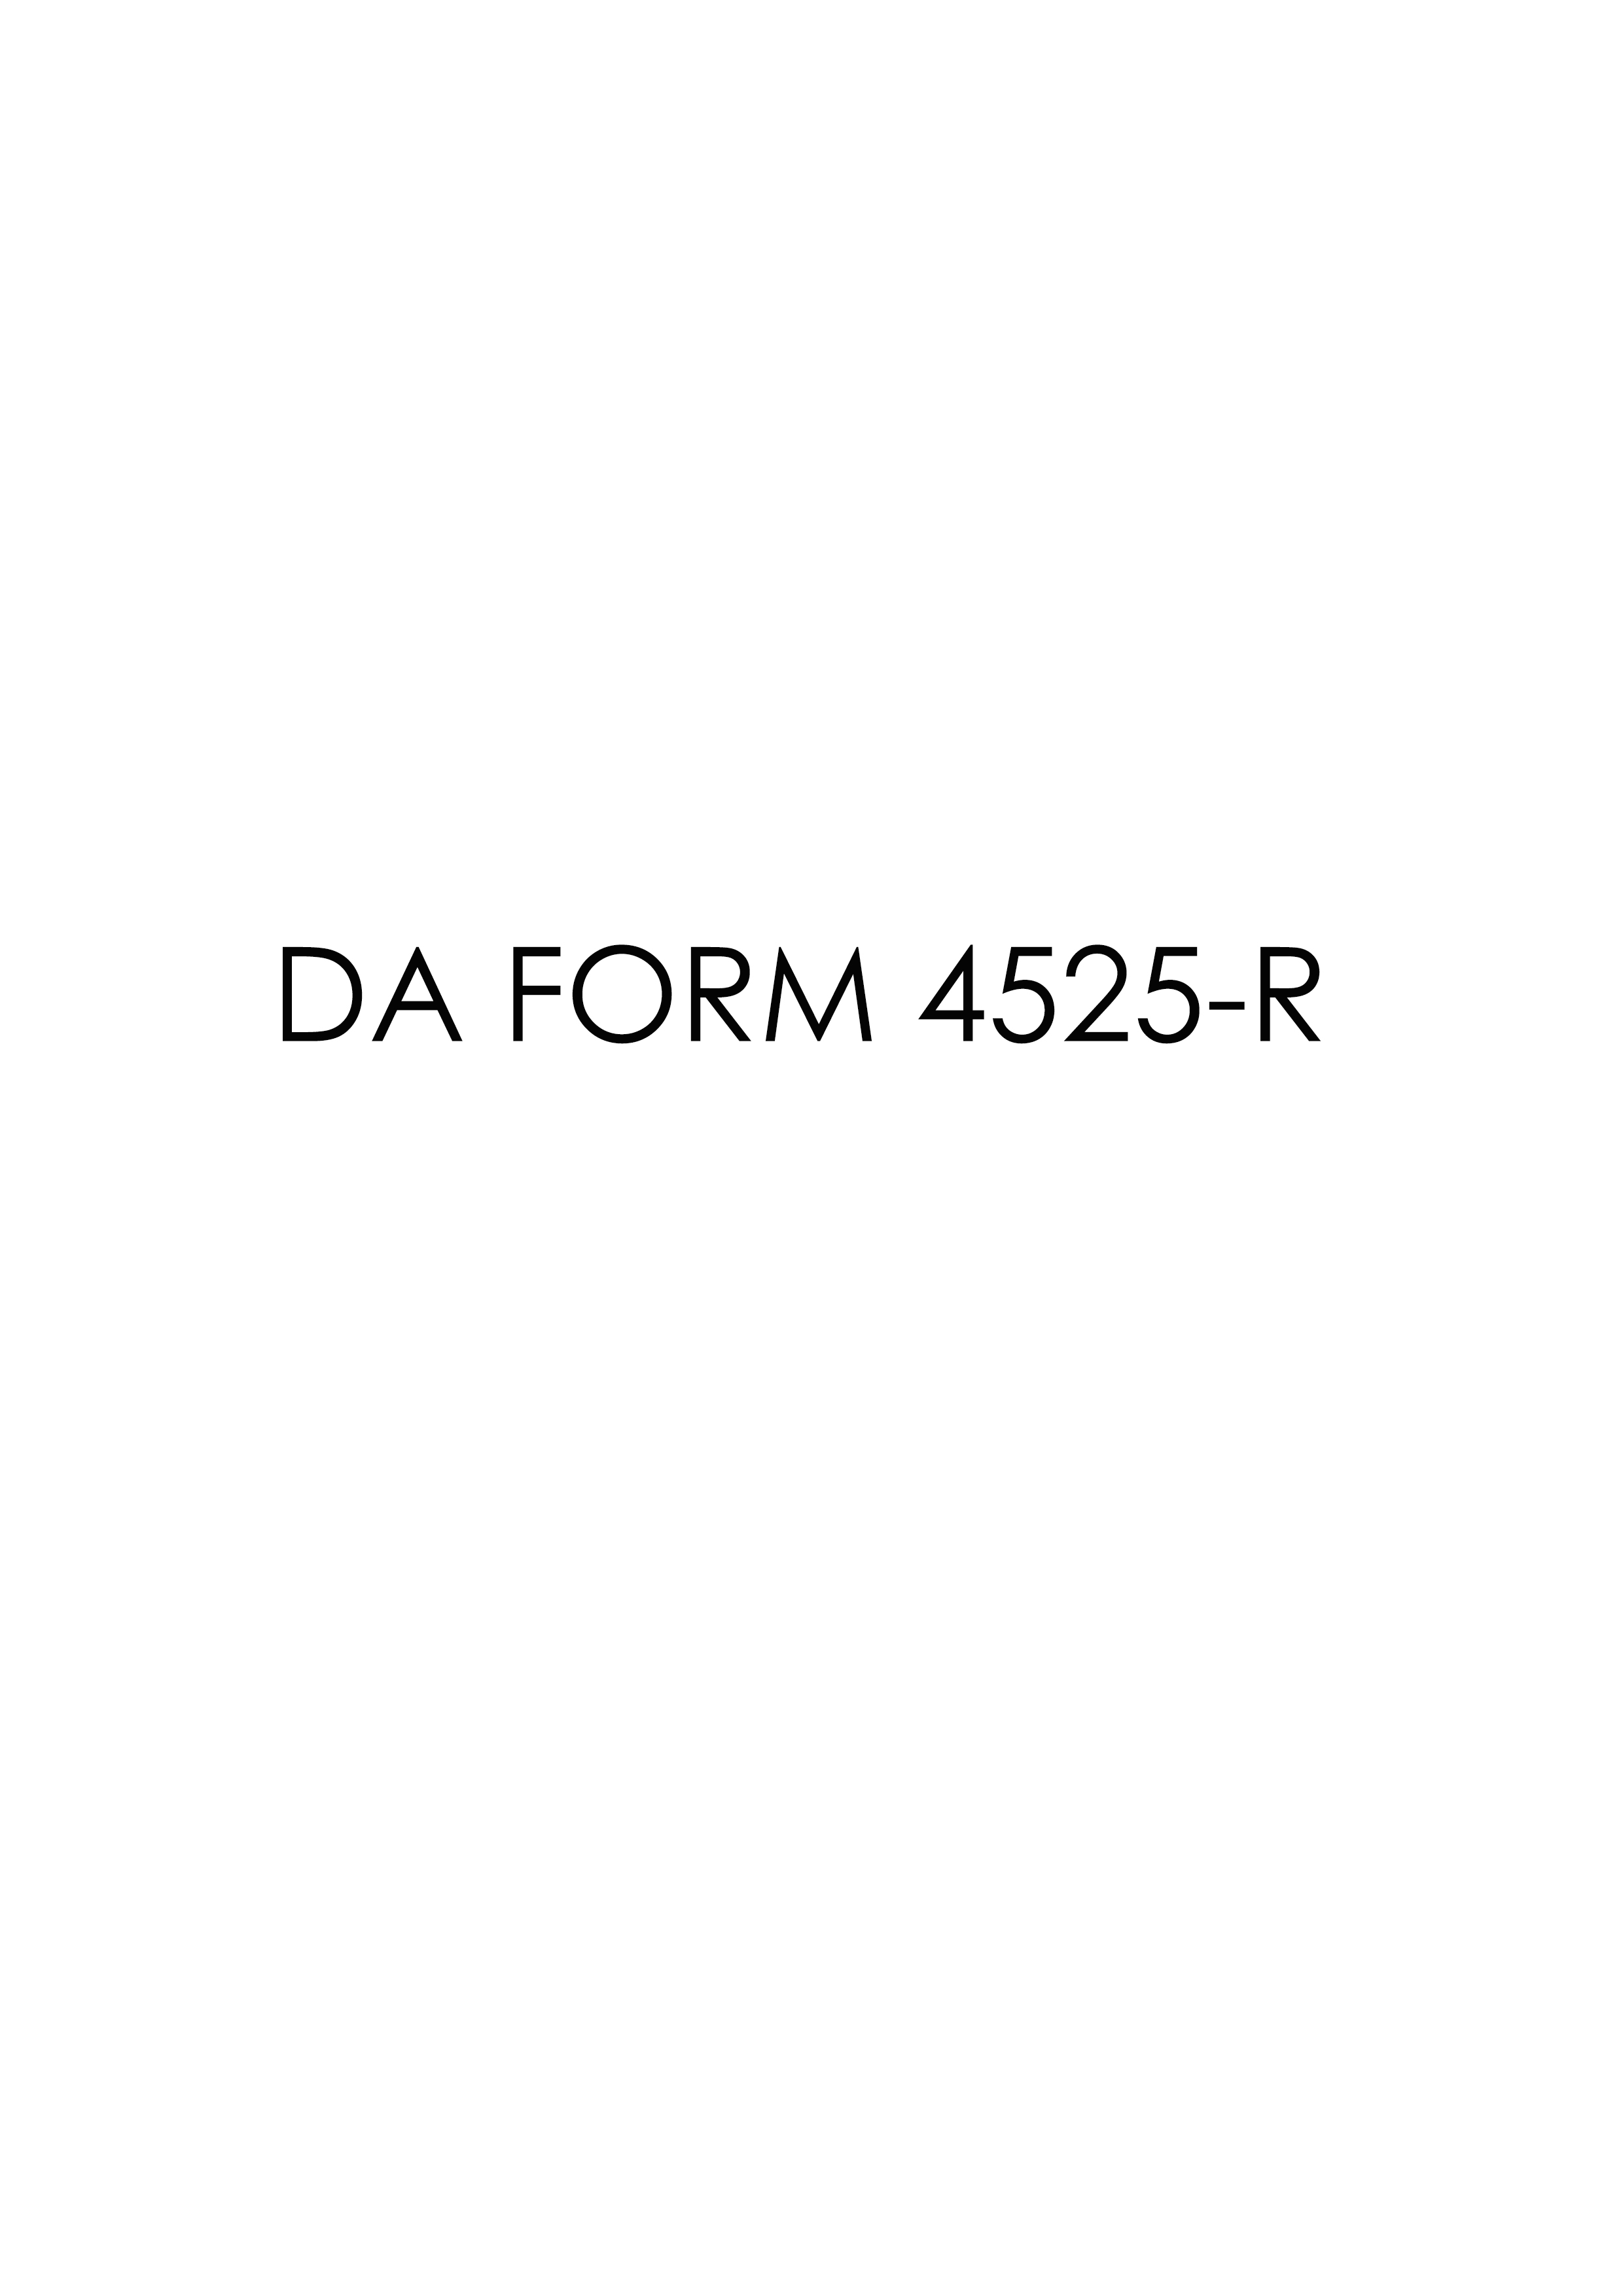 da Form 4525-R fillable